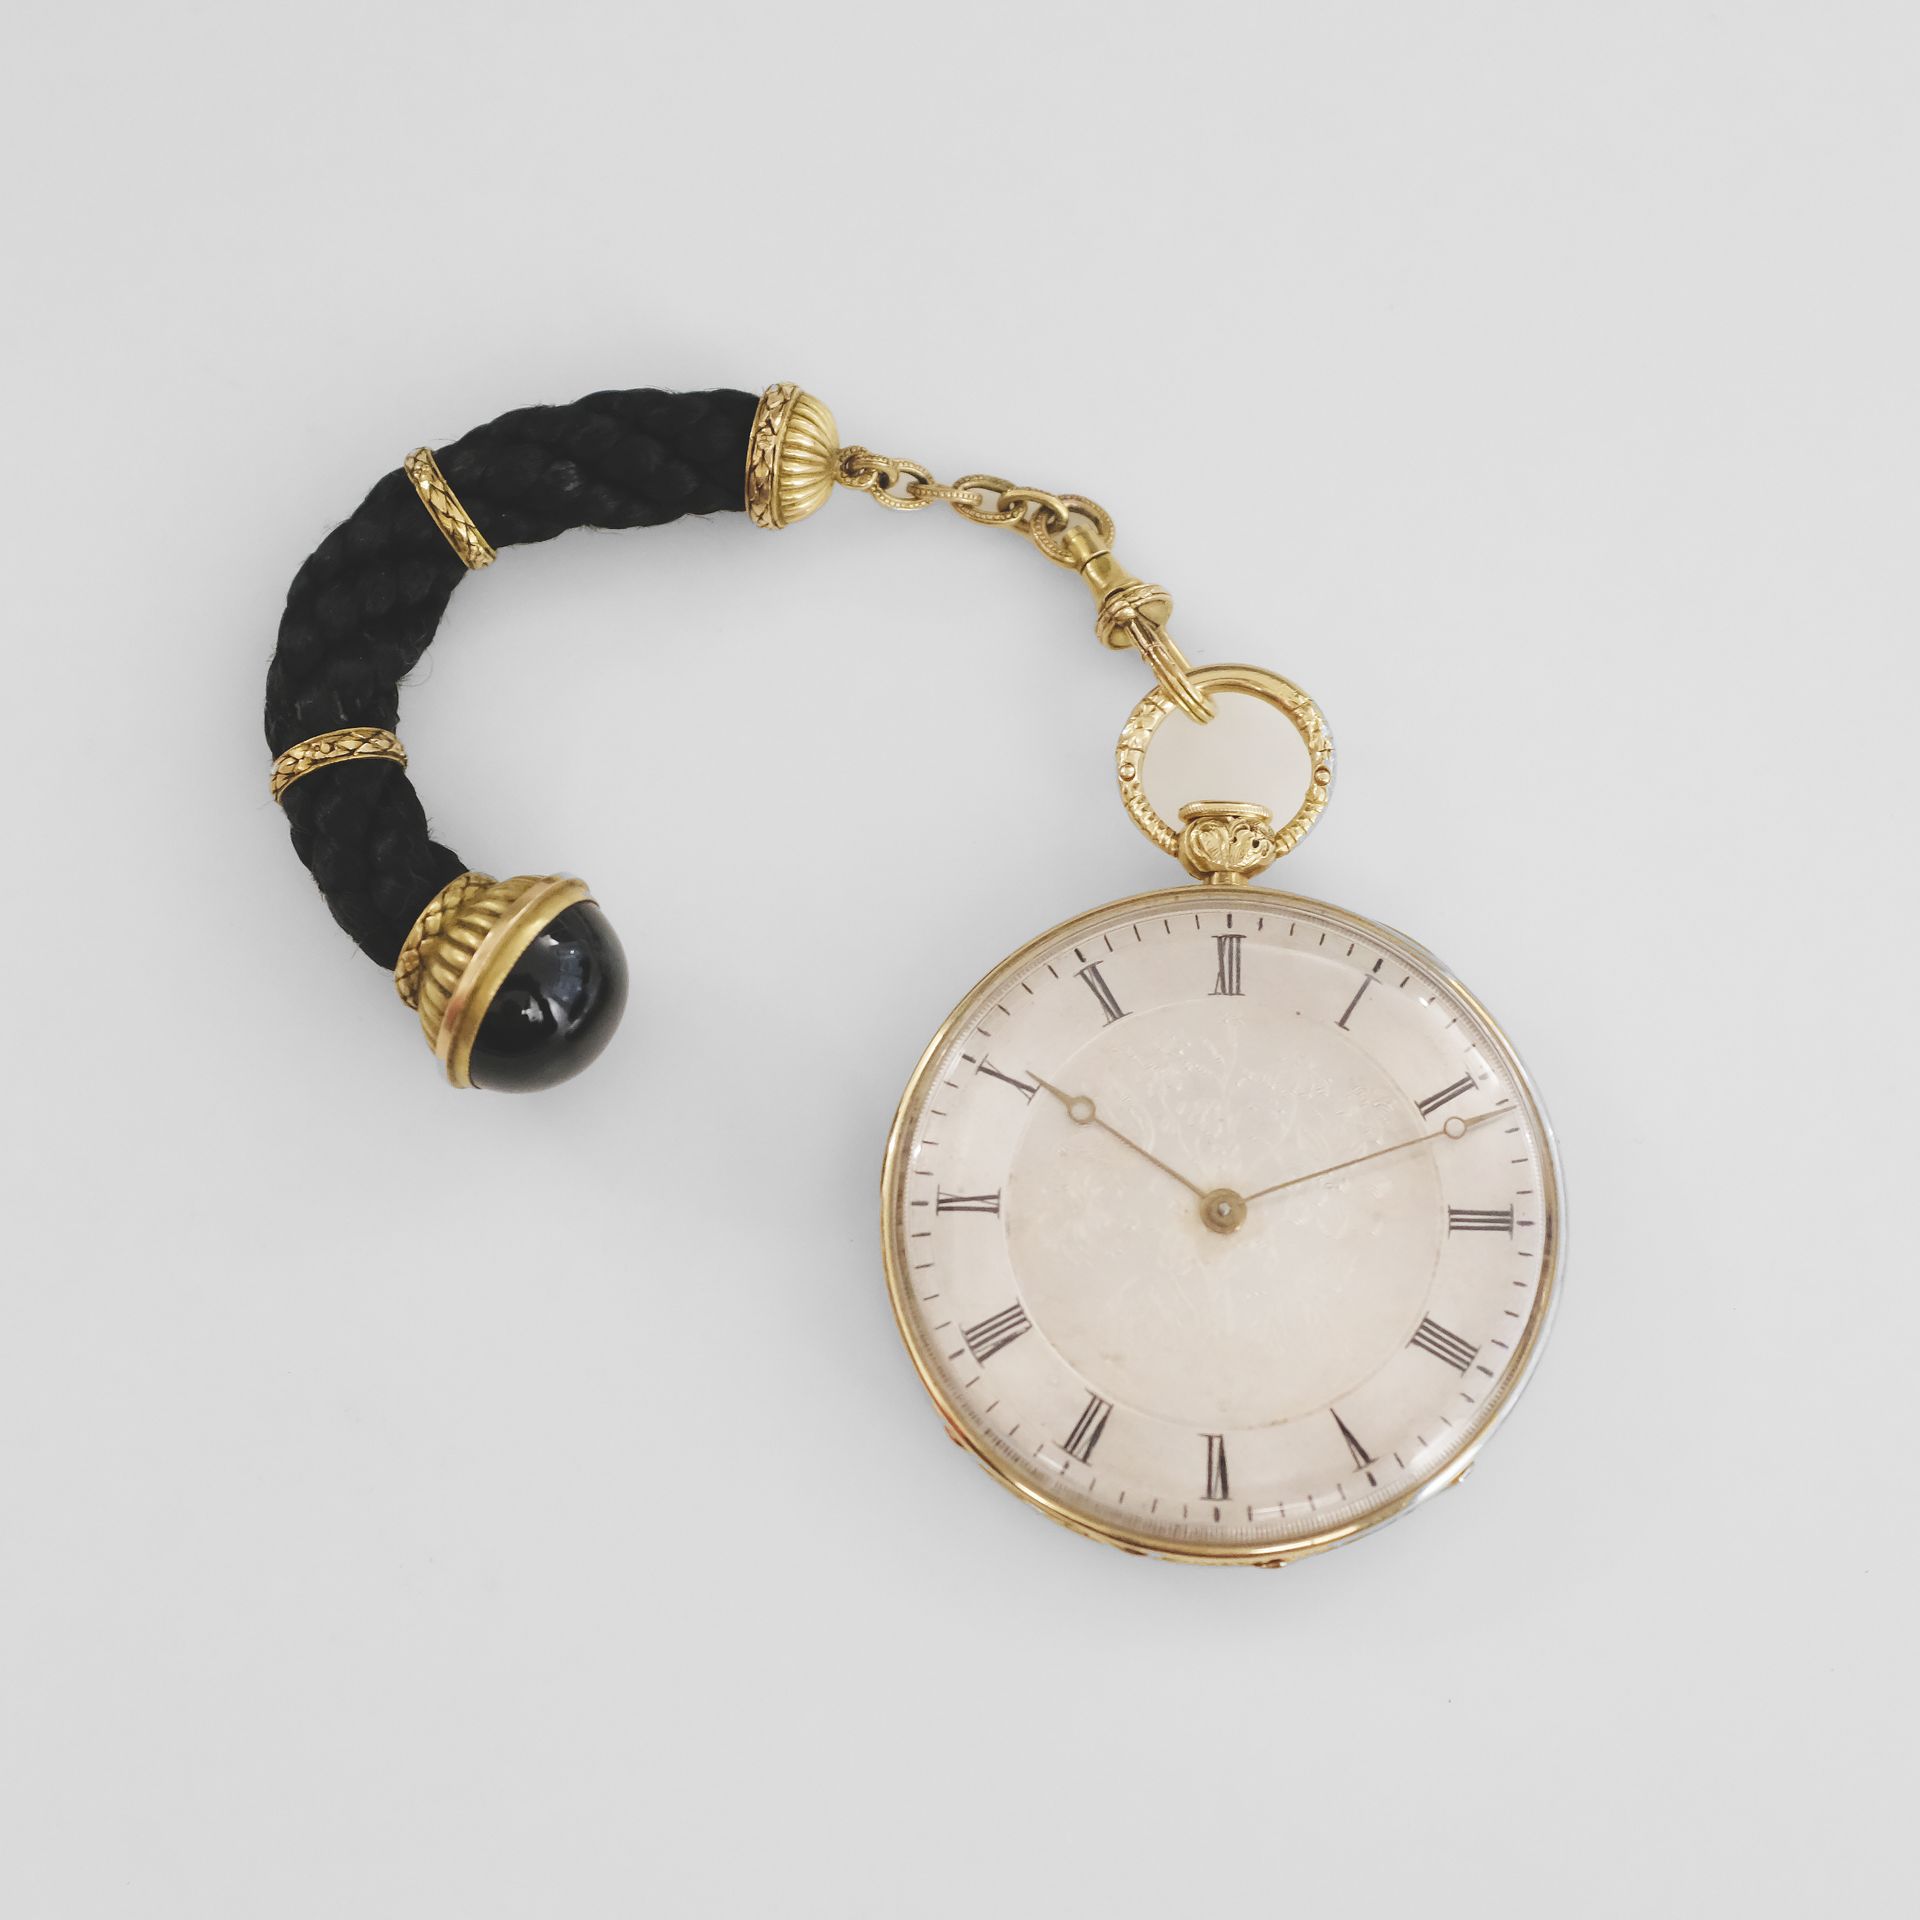 LEPINE No. 16042-90618
18k (750) yellow gold striking pocket watch, silver dial,&hellip;